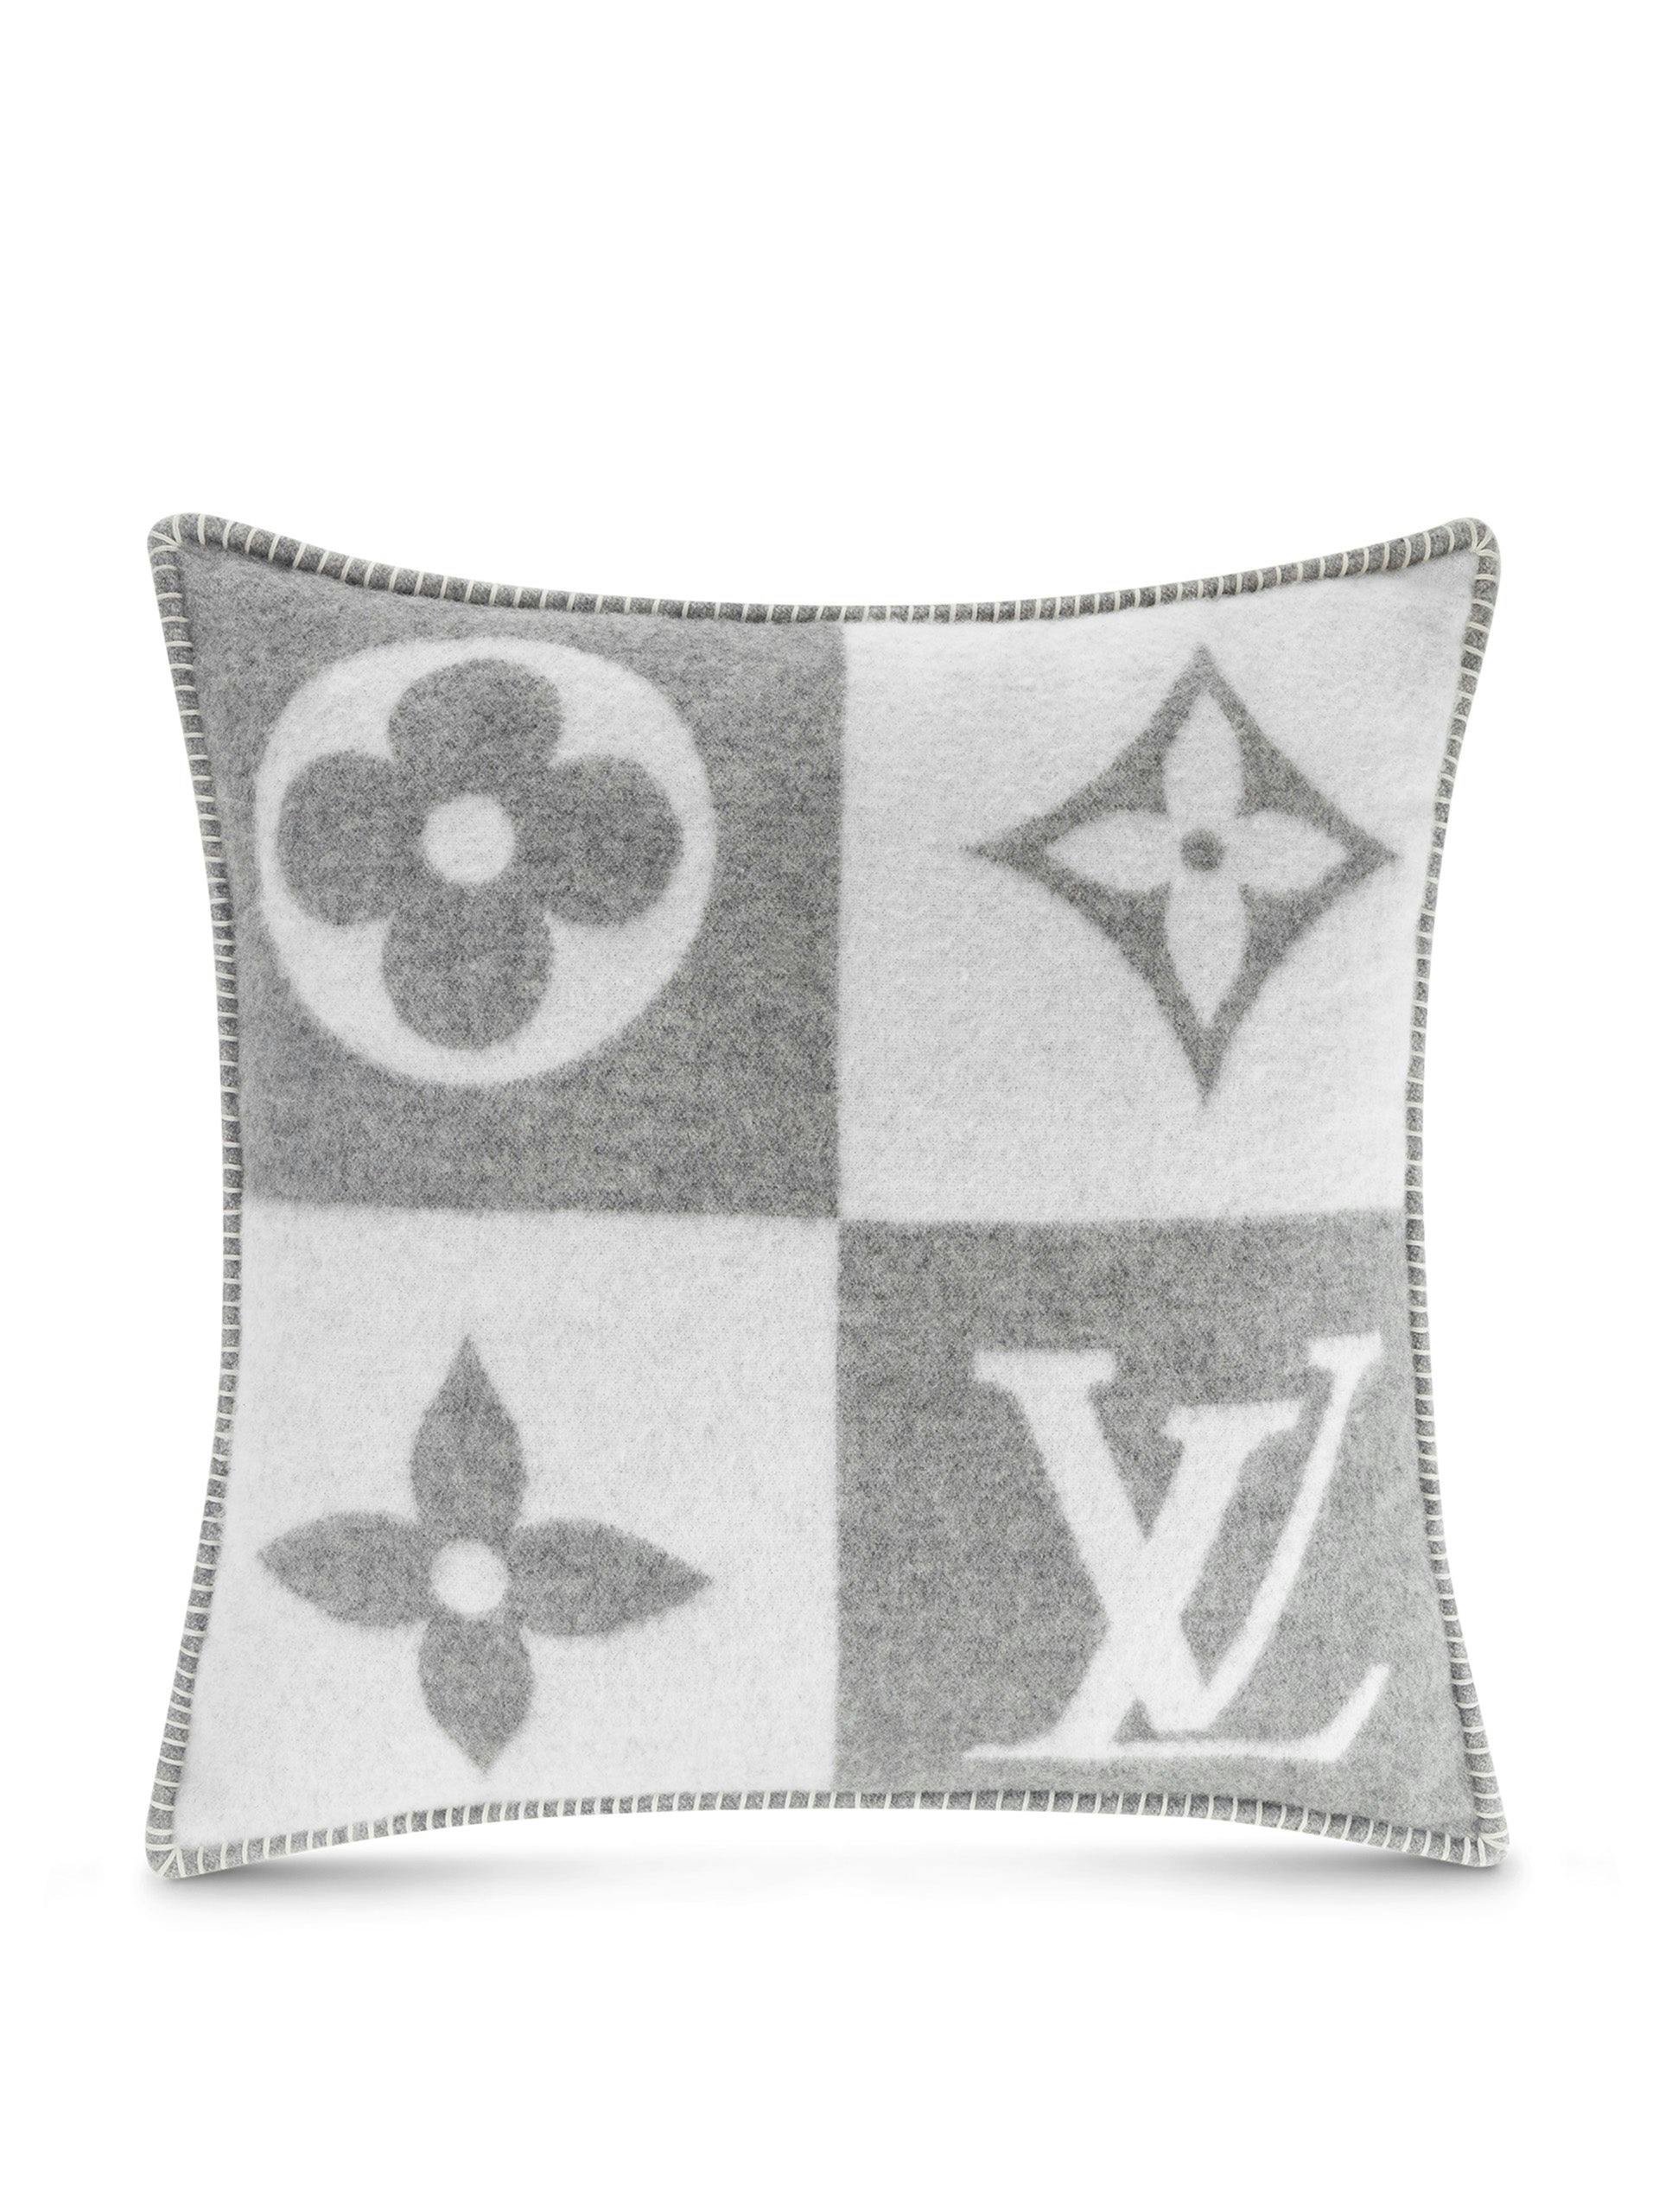 LV Checkmate grey cushion